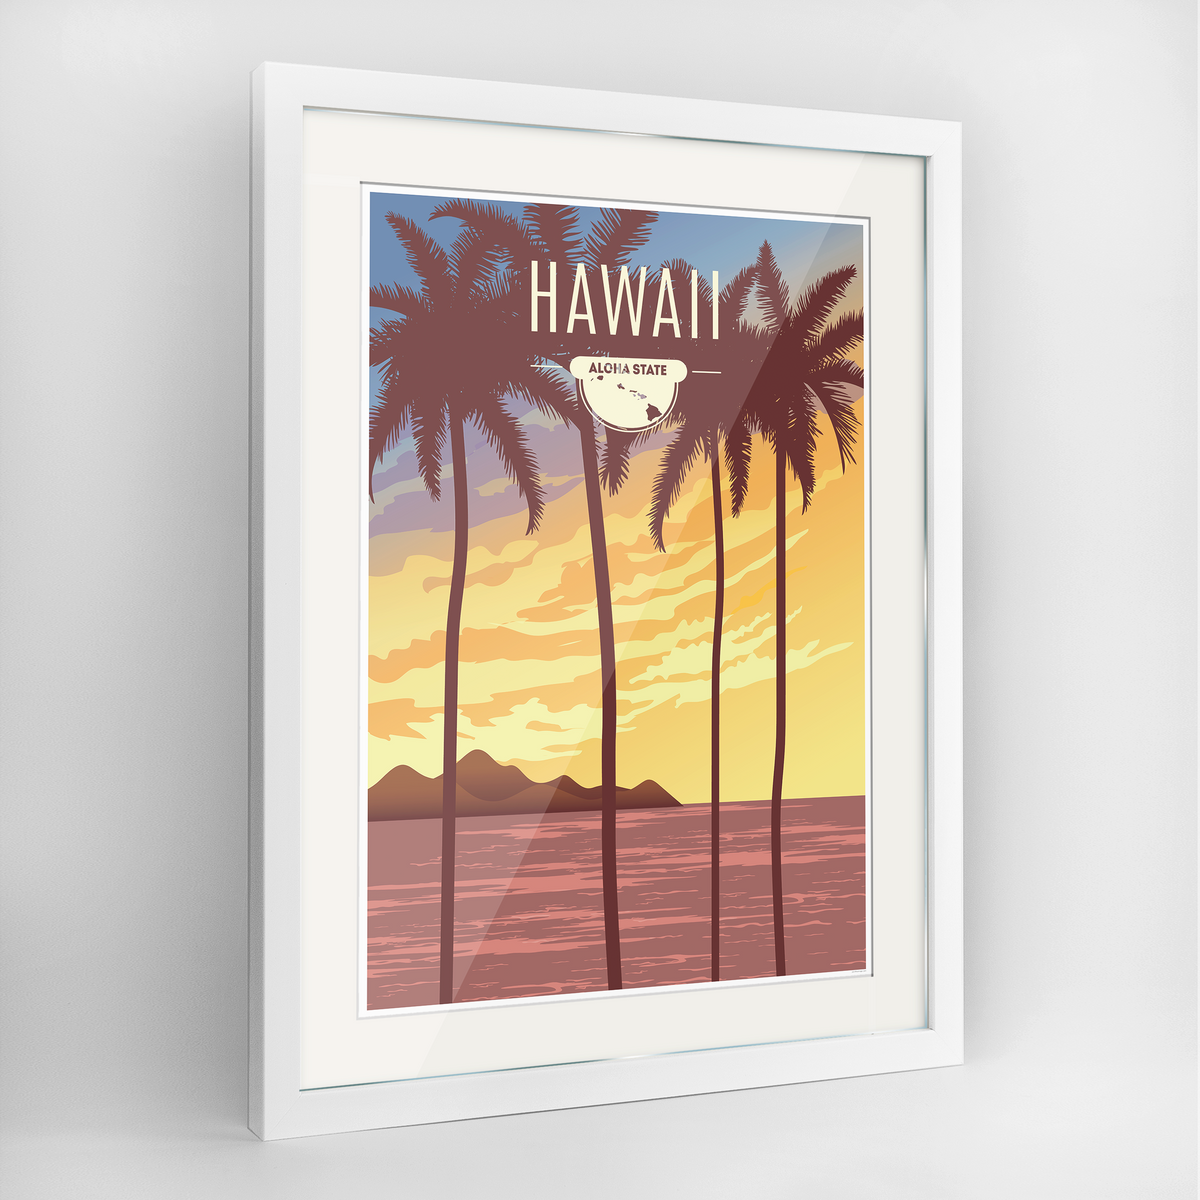 Hawaii State Frame Print